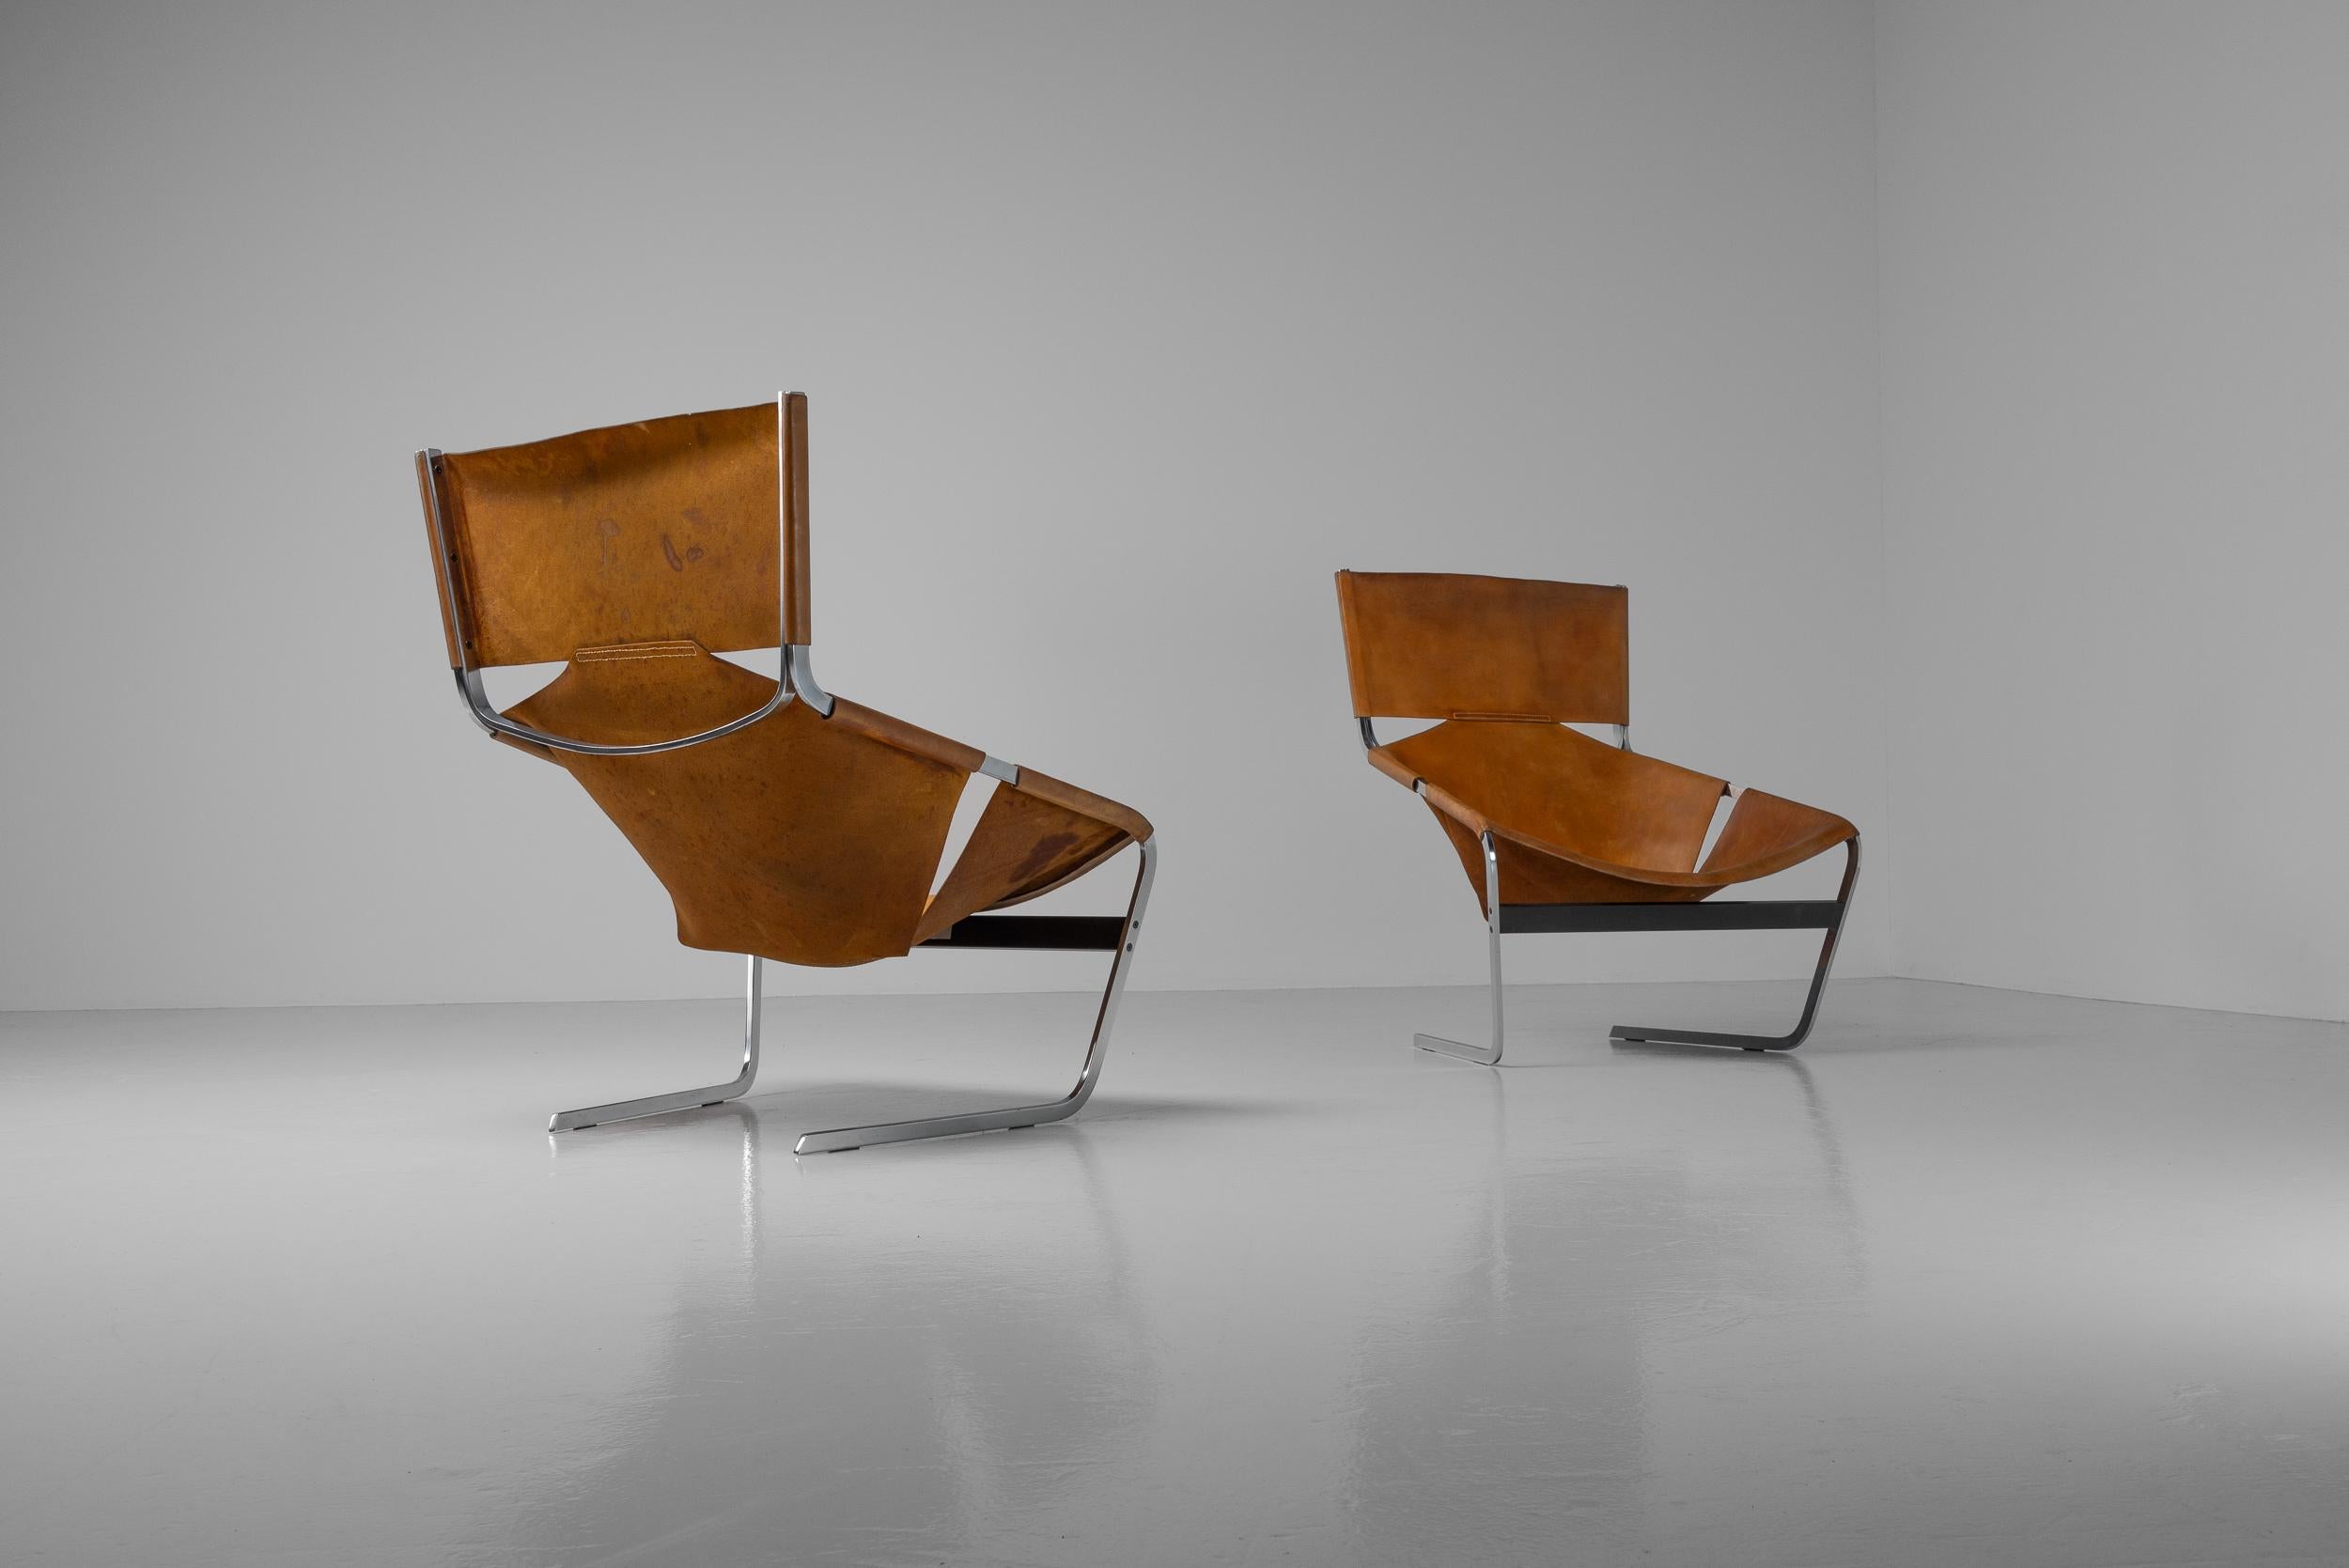 Steel Pierre Paulin F444 lounge chairs pair Artifort 1963 For Sale